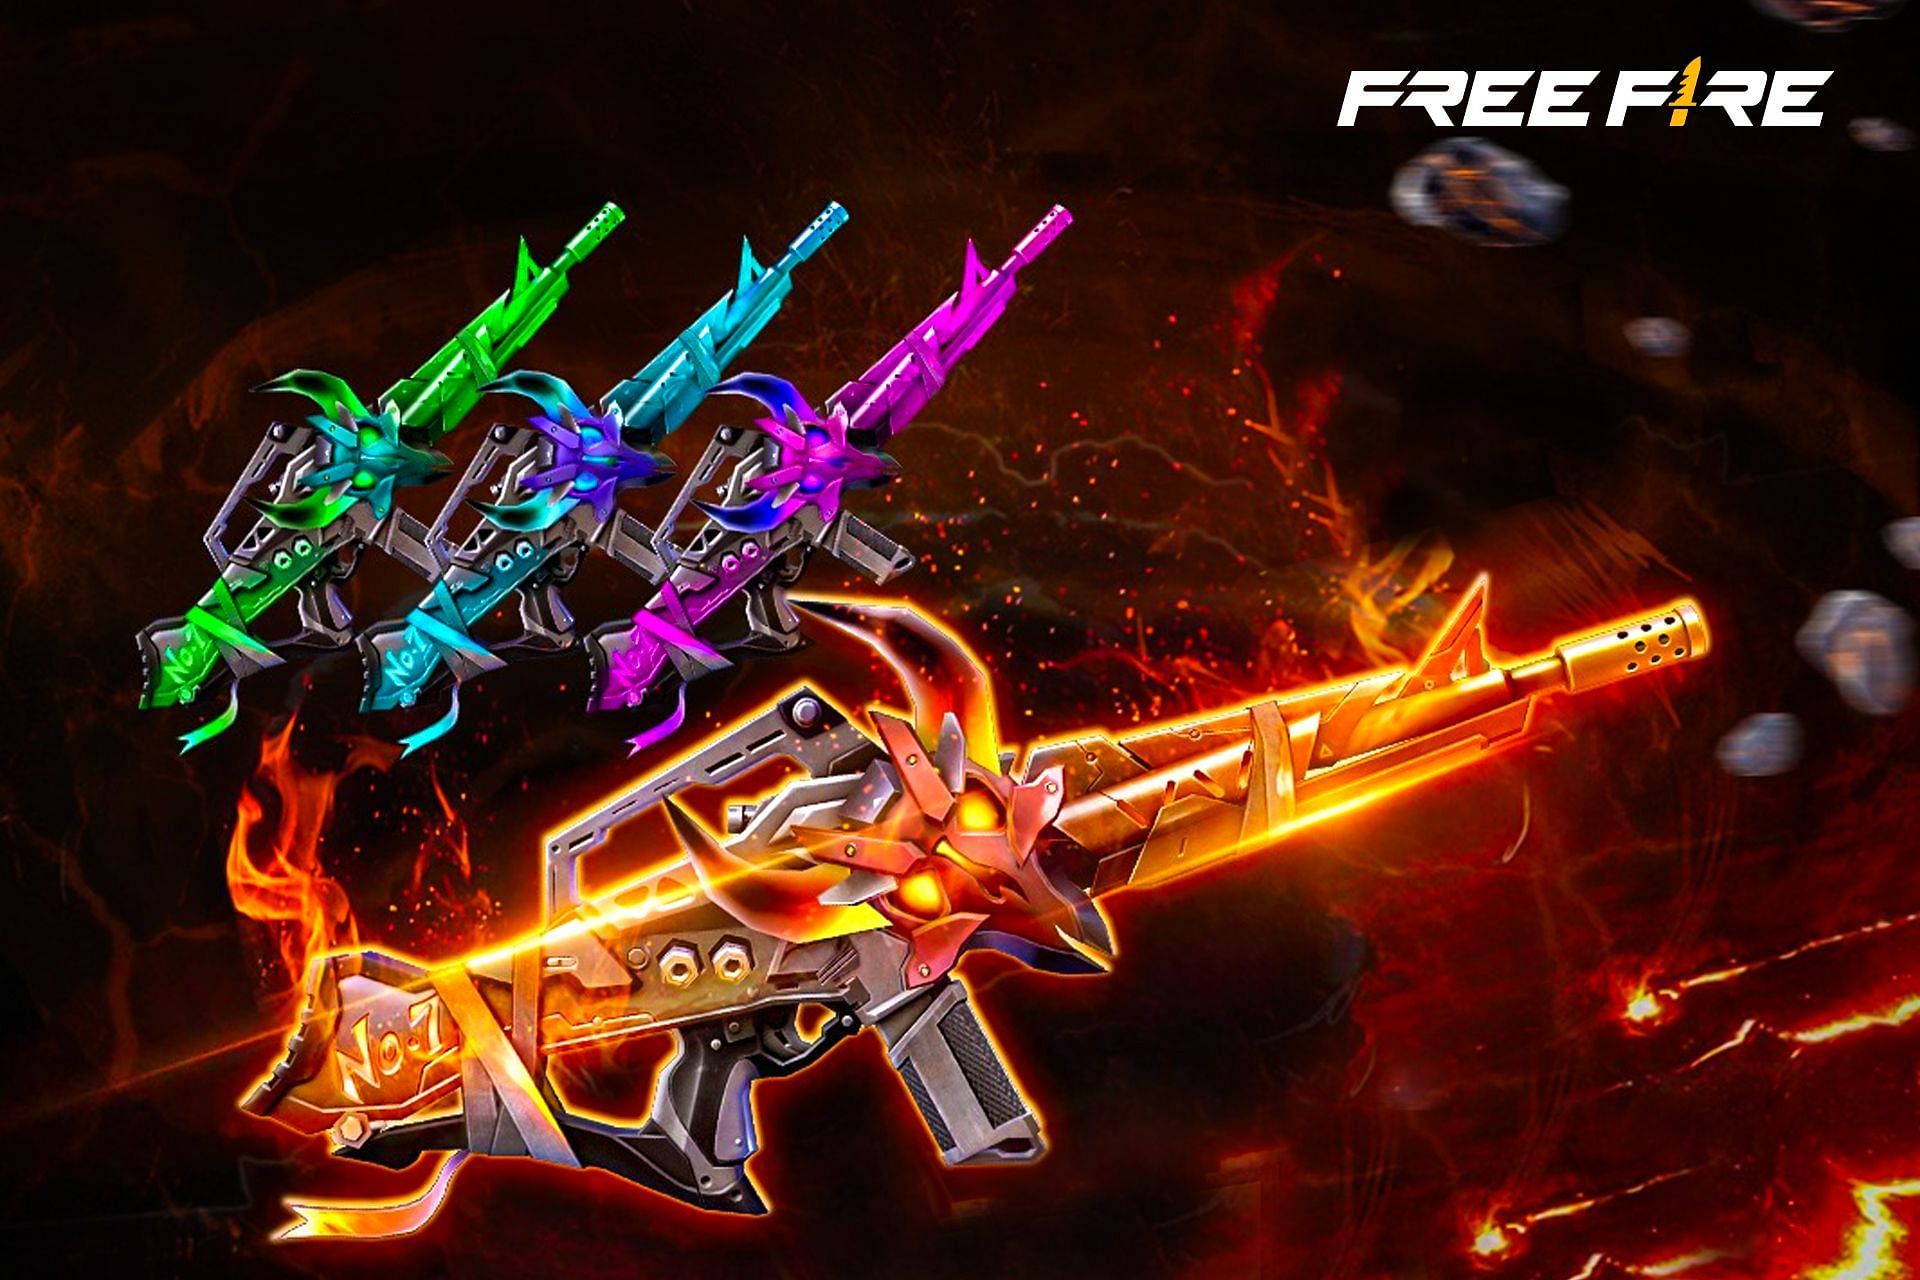  5 best Incubator gun skins released in Free Fire so far